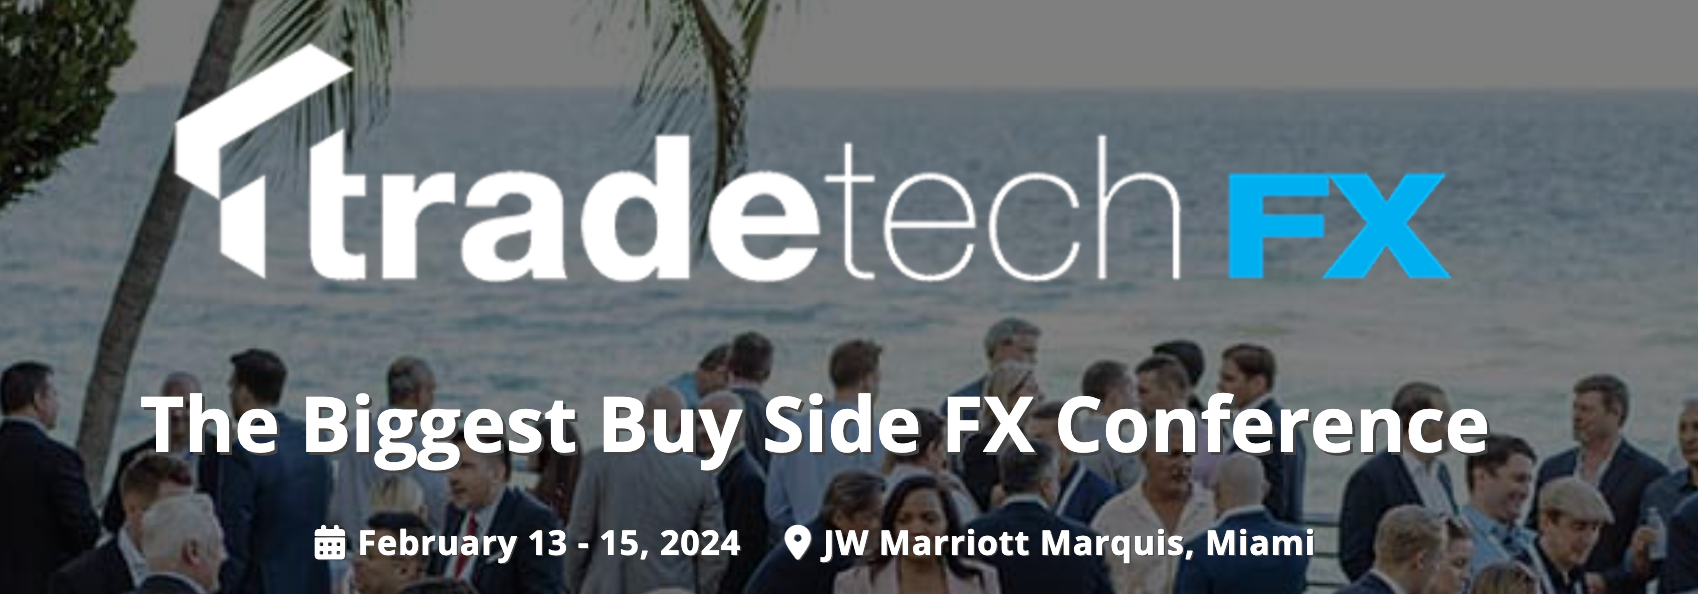 TradeTech FX USA conference image